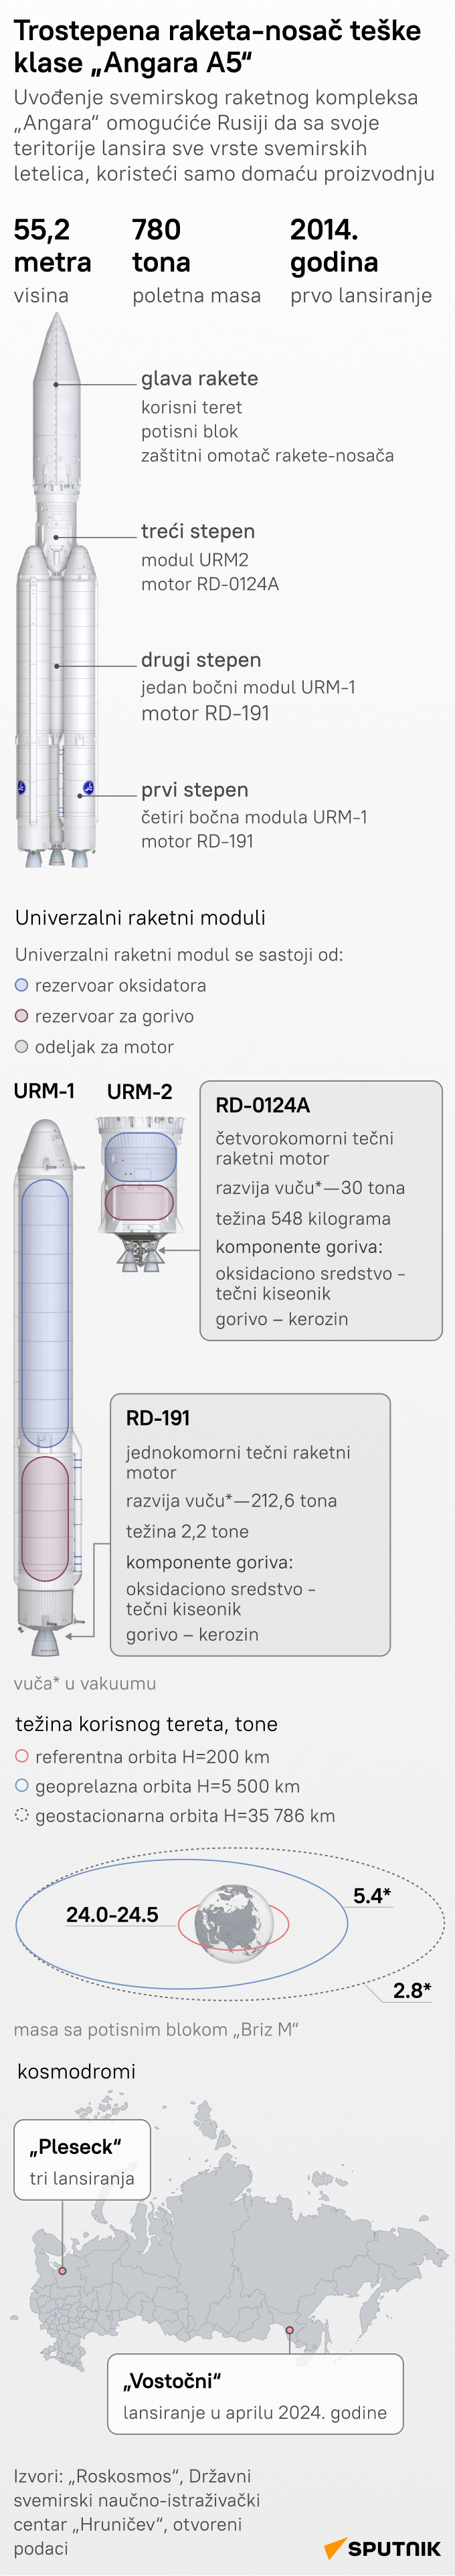 infografika raketa Angara LAT mob - Sputnik Srbija